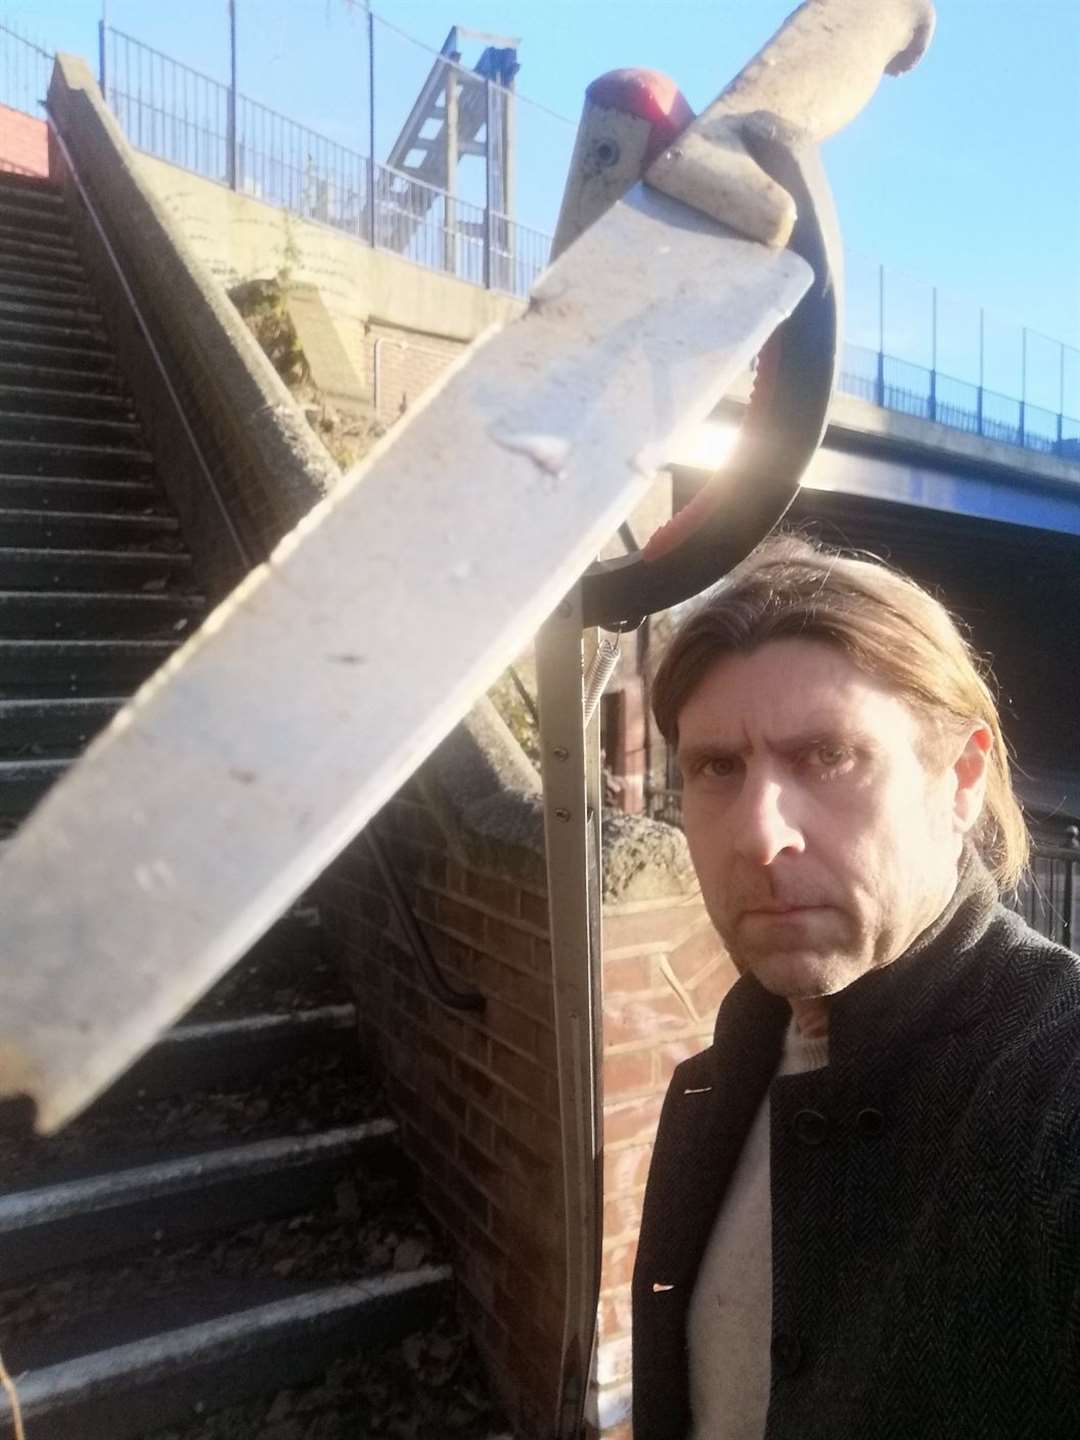 Tony Harwood with the blade found at Maidstone's High Level Rail Bridge